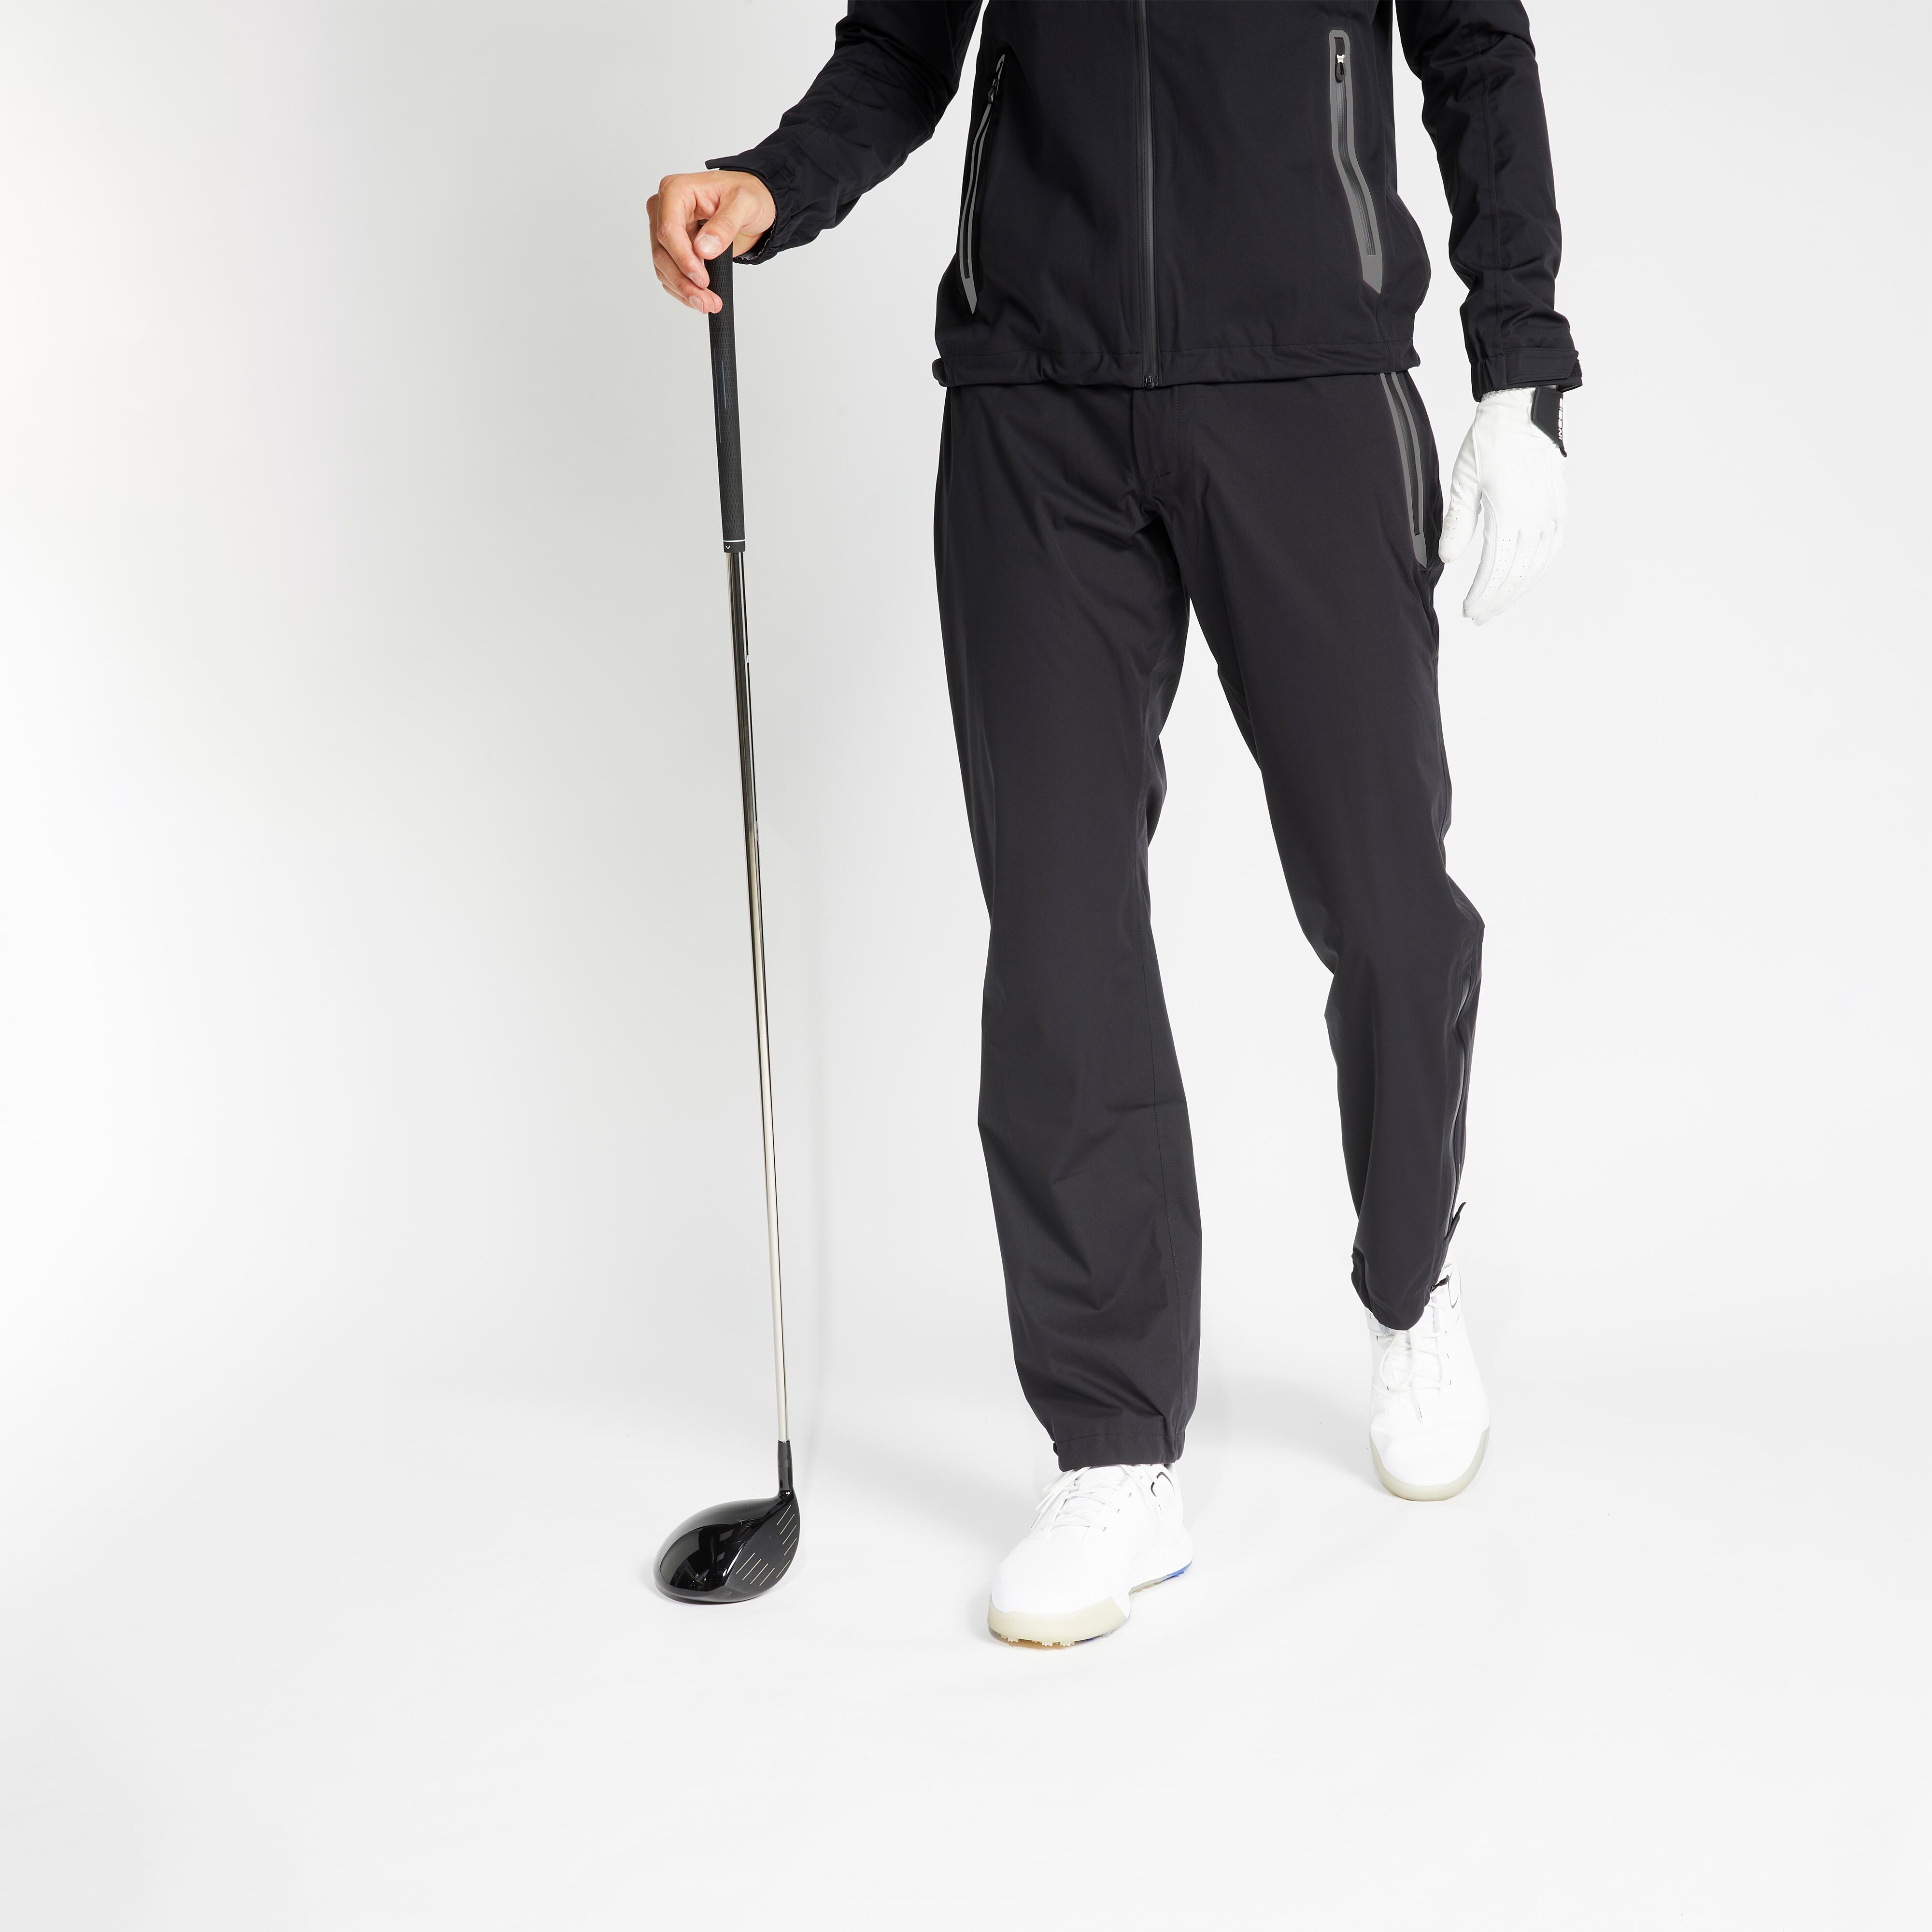 Pantalon Impermeabil Golf Rw500 Negru Barbati